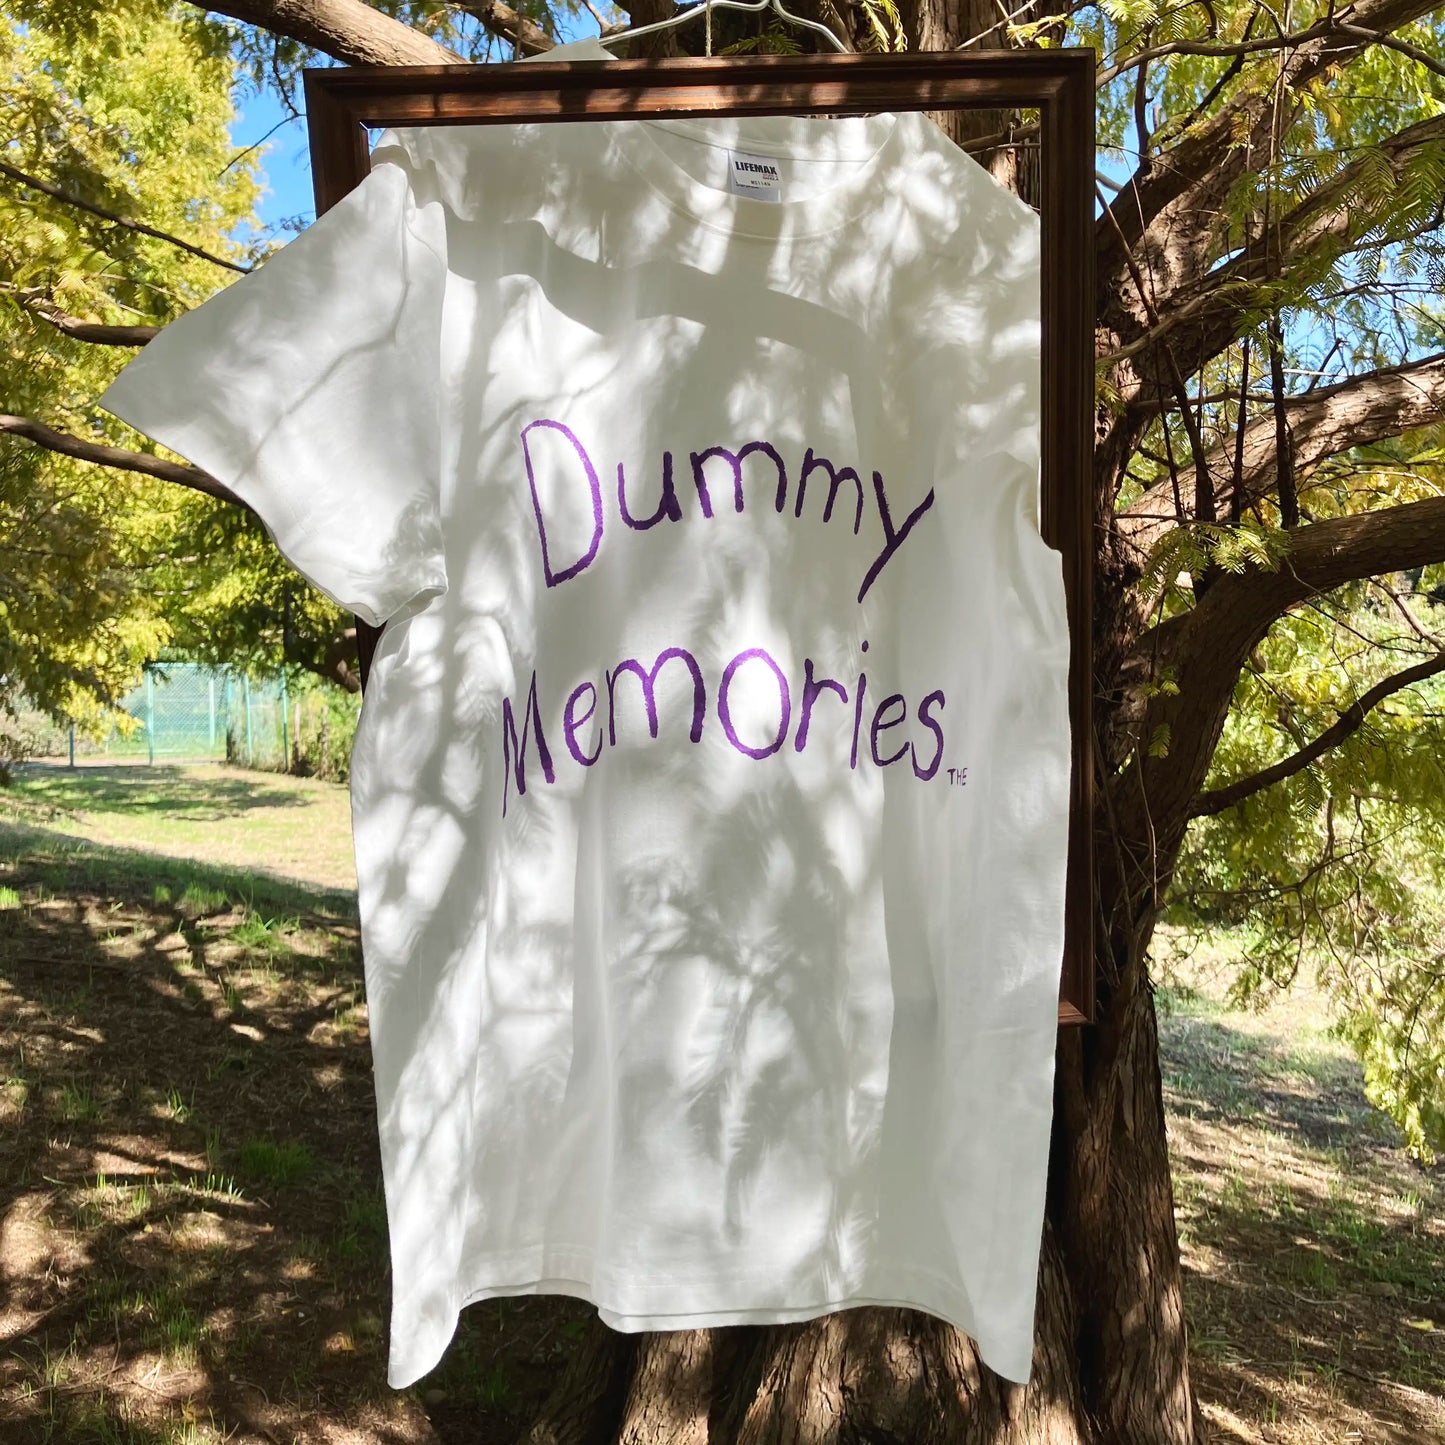 The Dummy Memories T-shirt